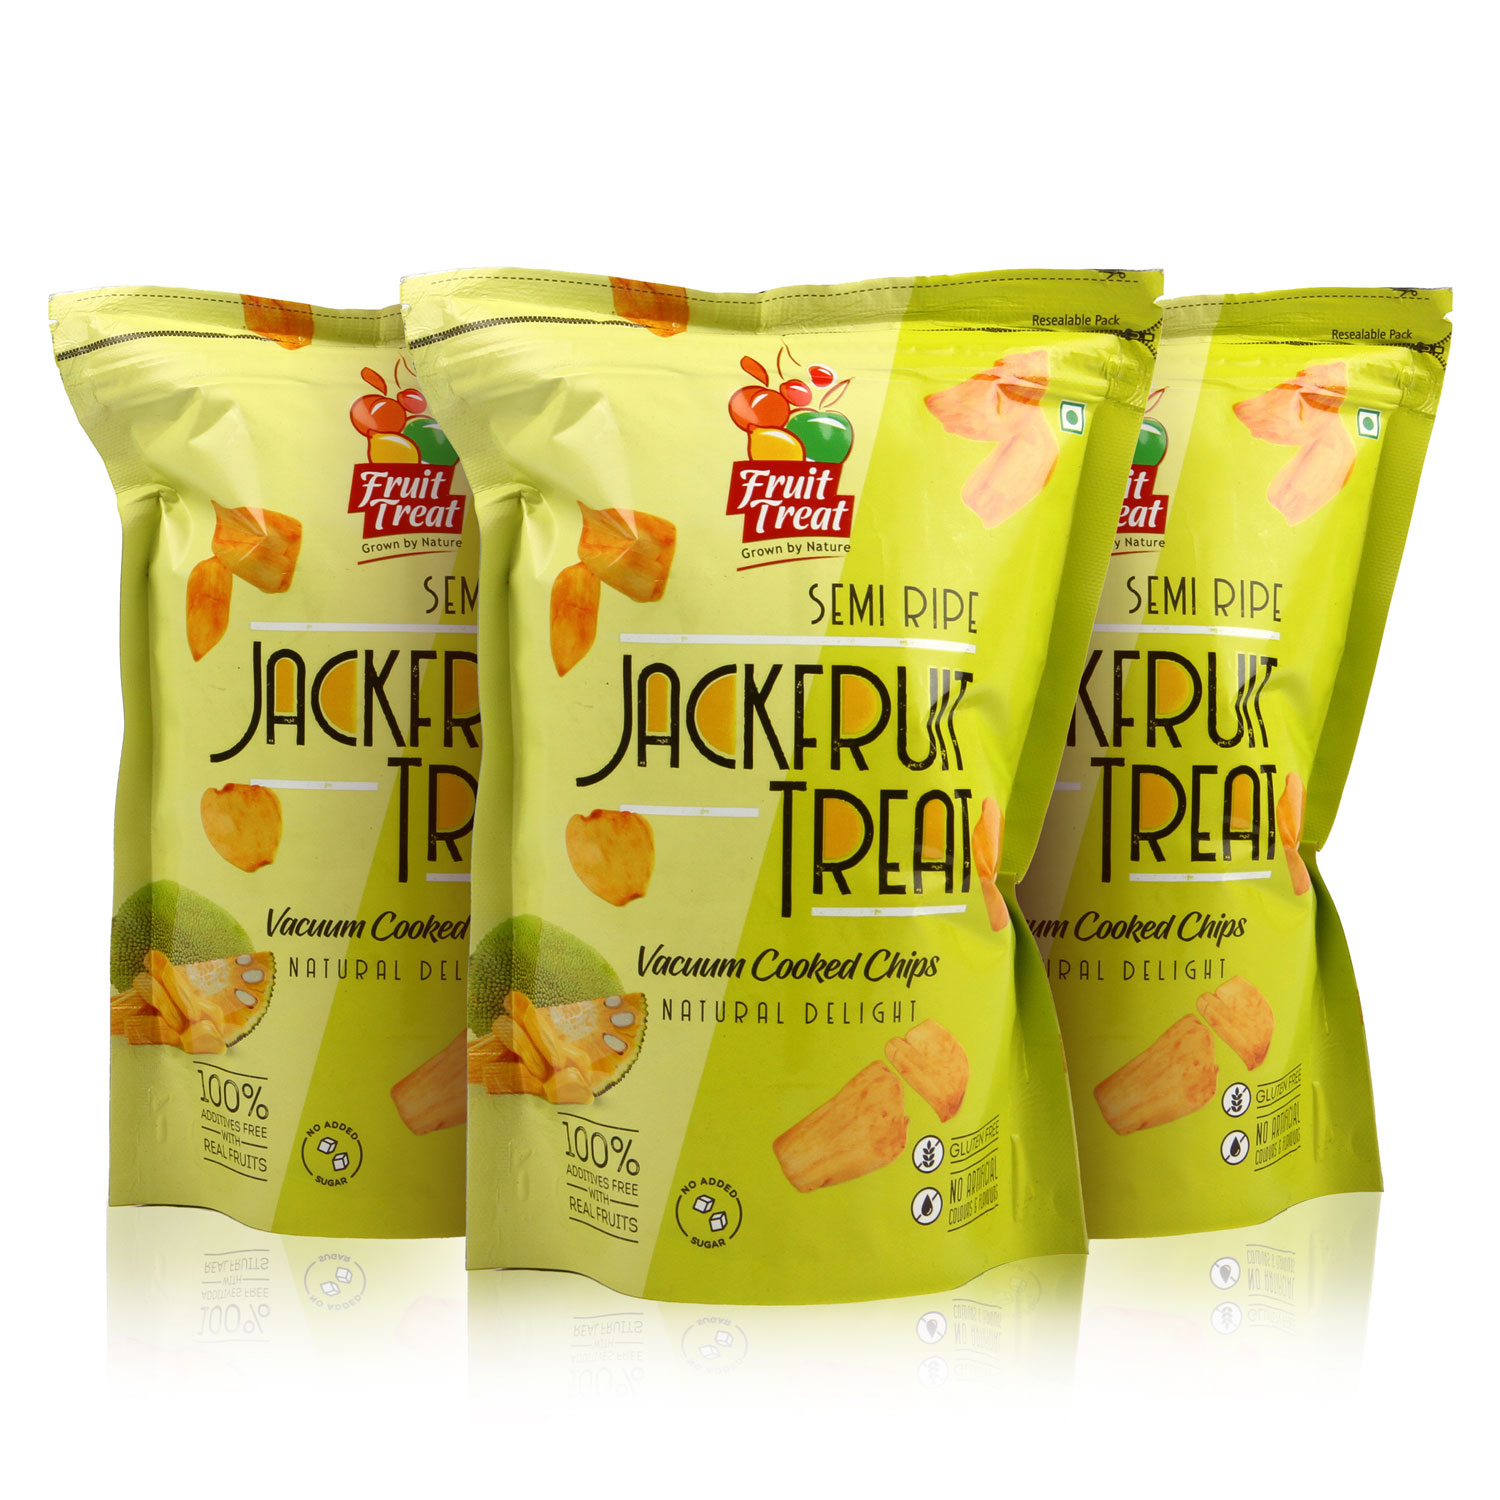 Vacuum Fried Jackfruit Treat Combo pack of 3